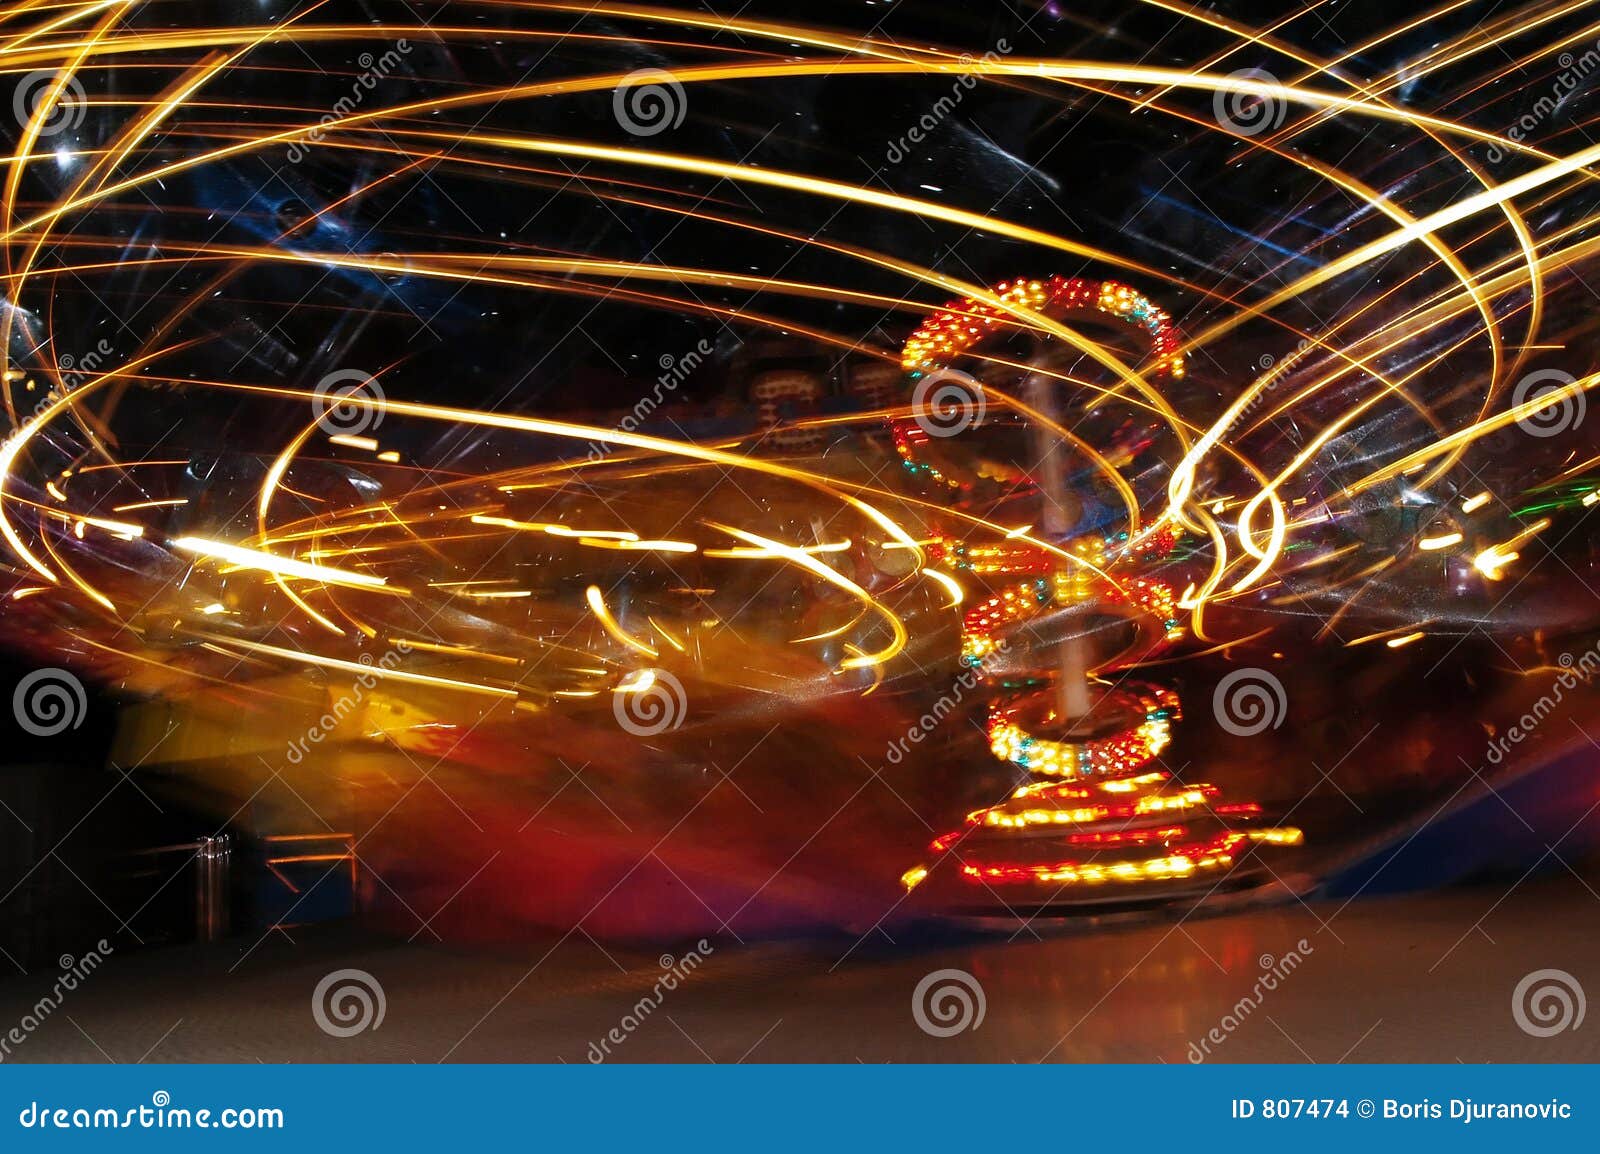 speed light in luna park